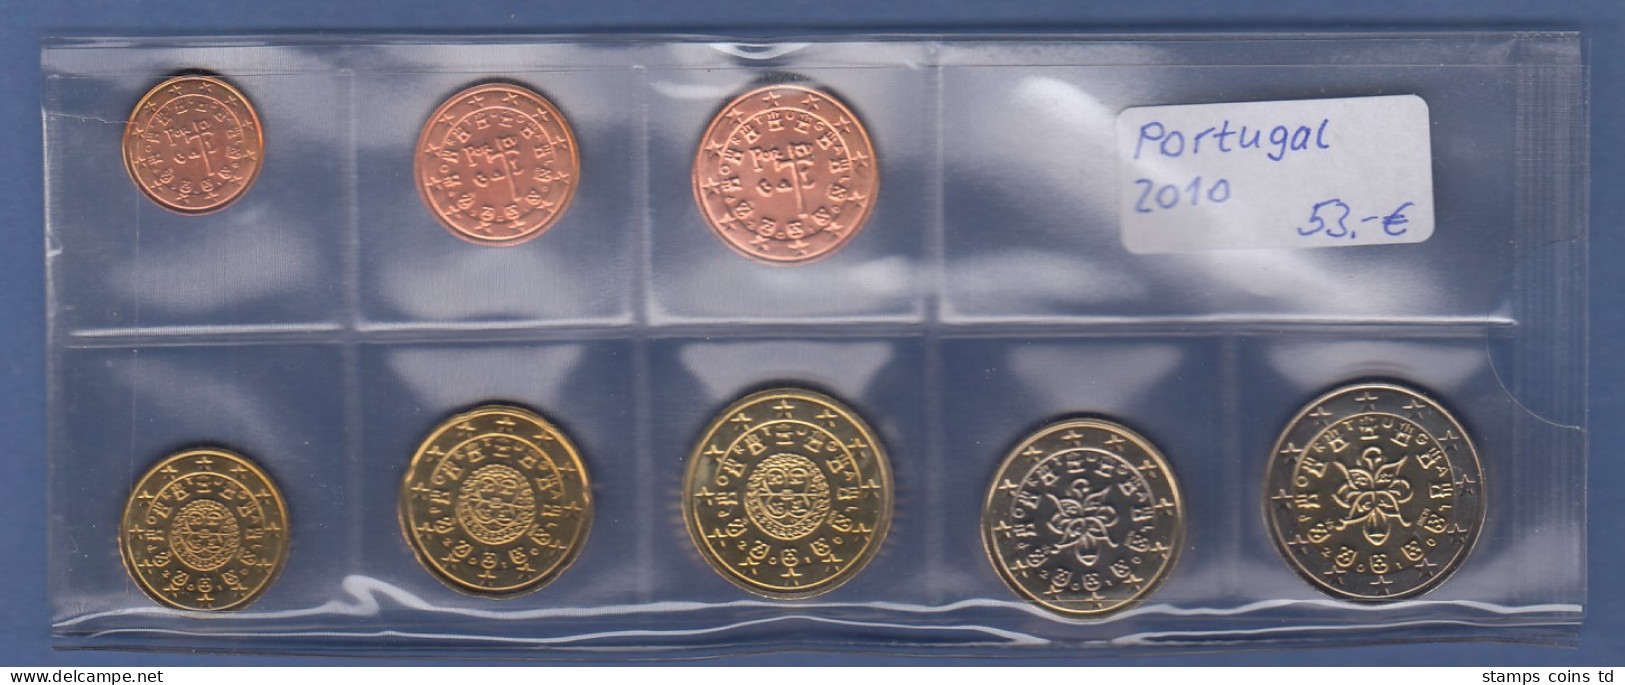 Portugal EURO-Kursmünzensatz Jahrgang 2010 Bankfrisch / Unzirkuliert - Portugal